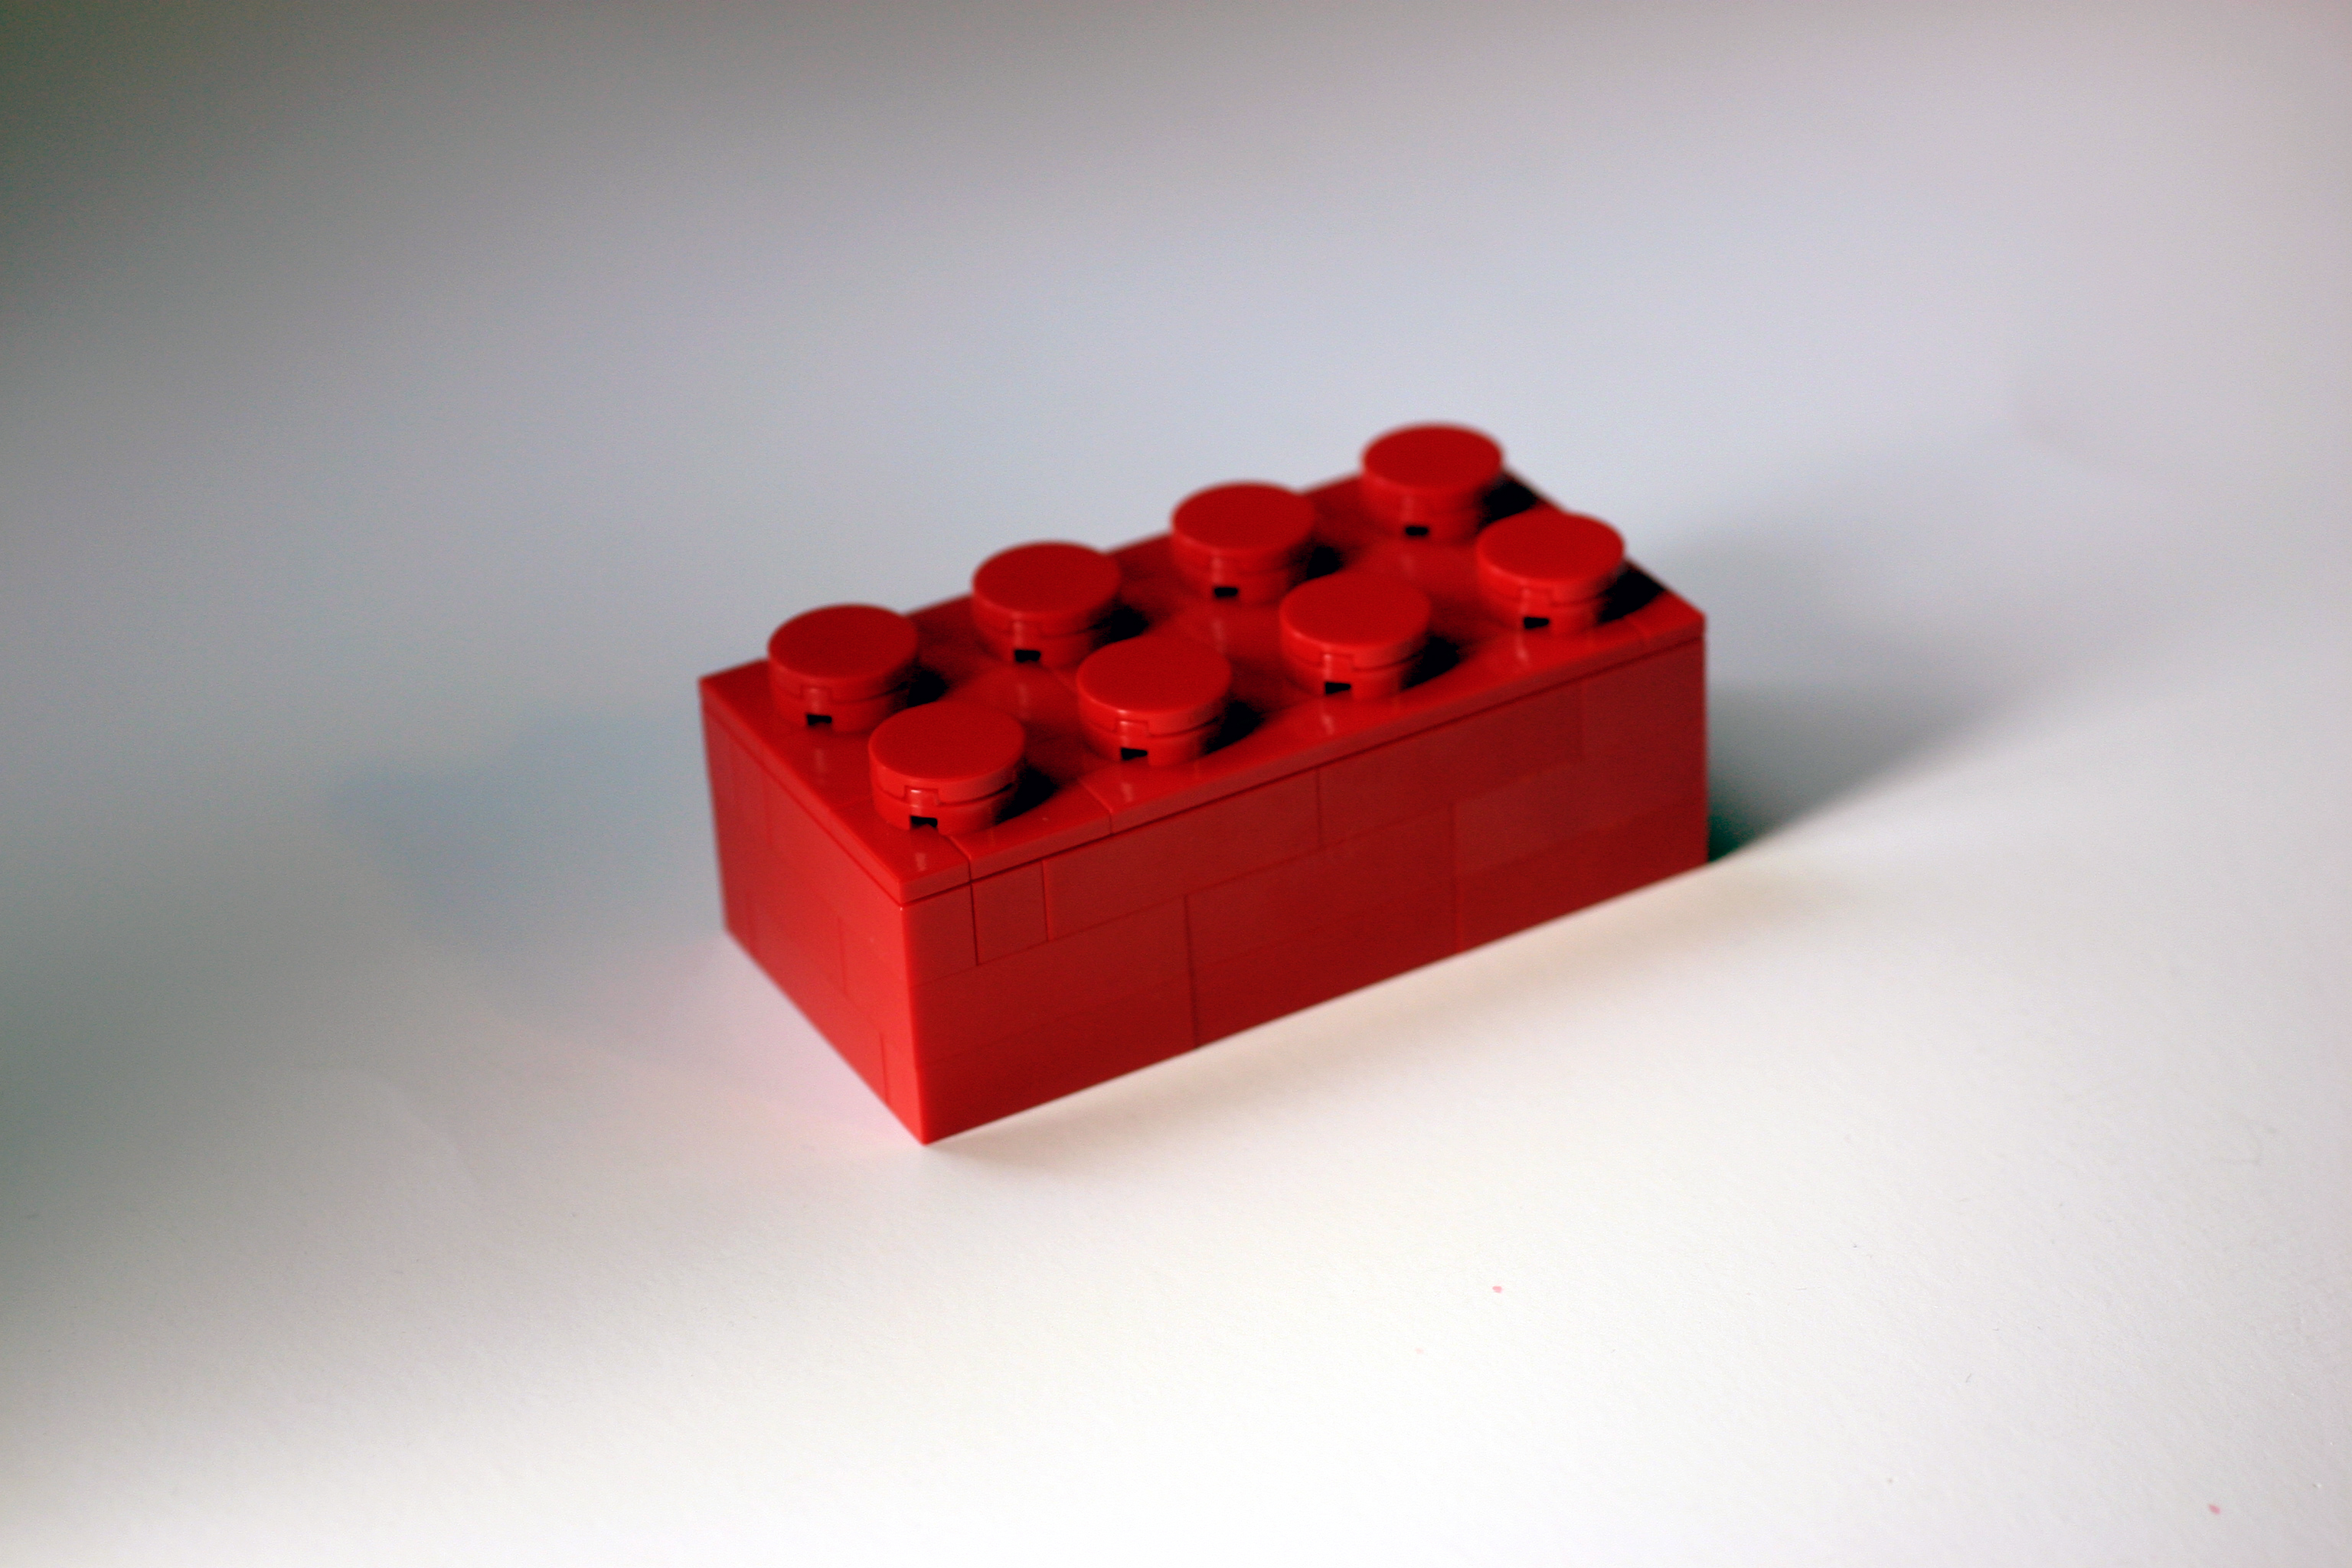 File:Lego Color Bricks.jpg - Wikipedia